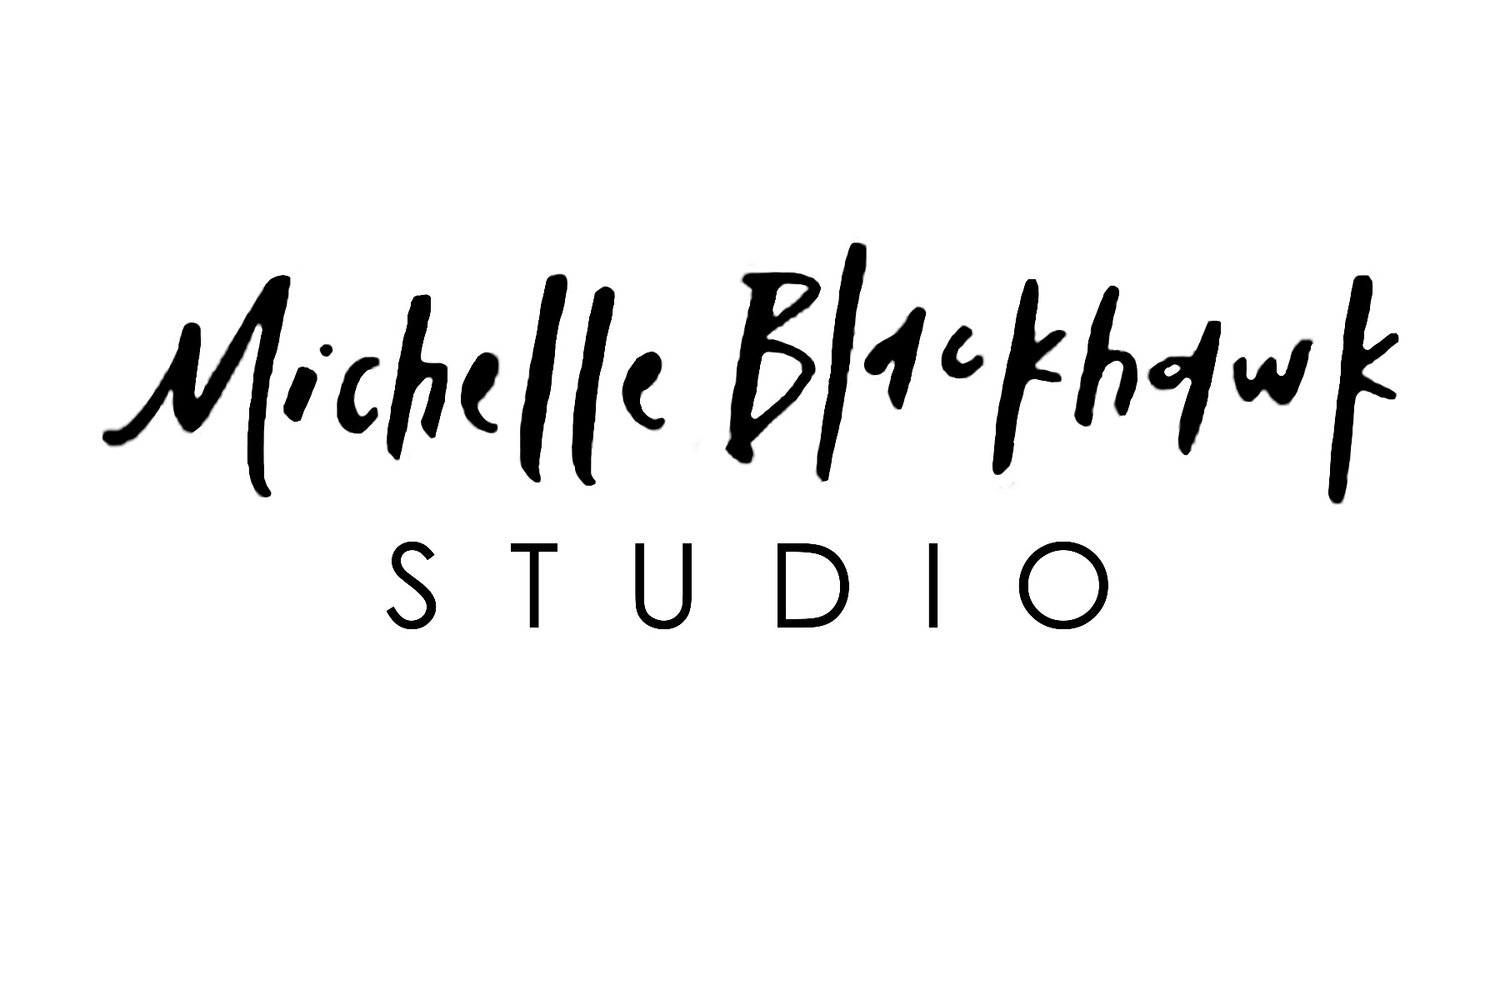 Michelle Blackhawk Studio